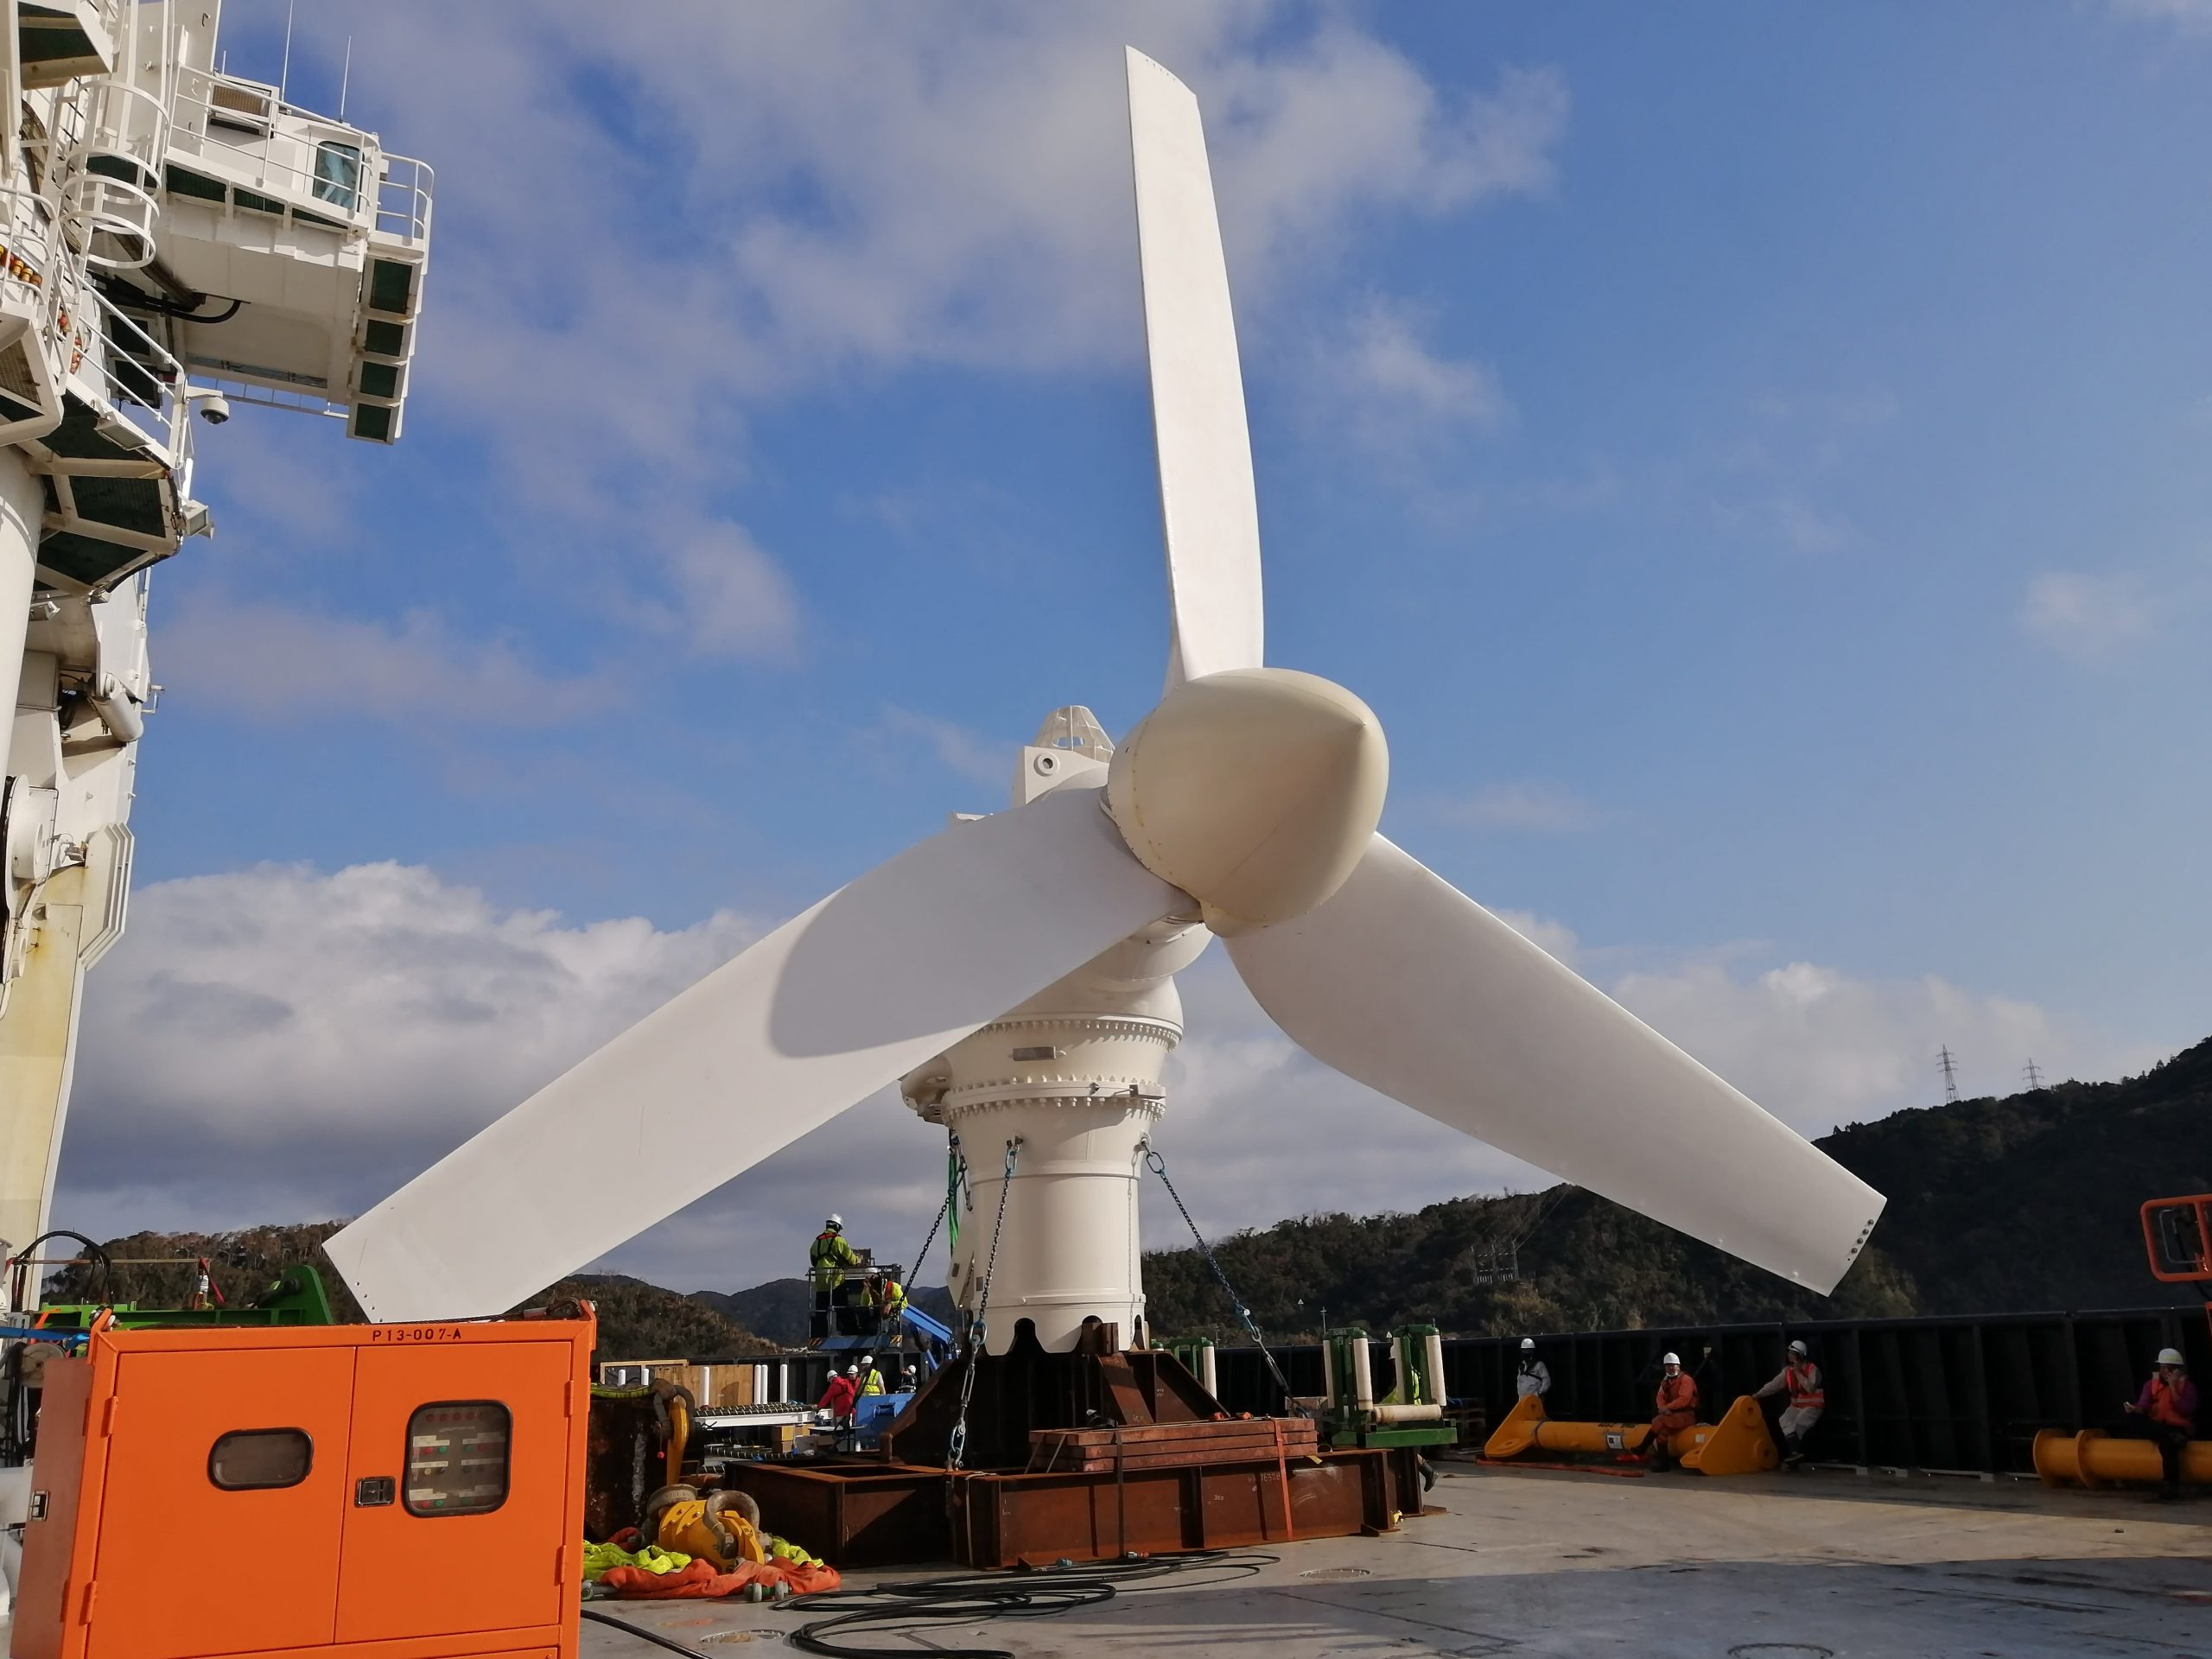 A tidal turbine inbuilt Scotland is now producing energy in Japan